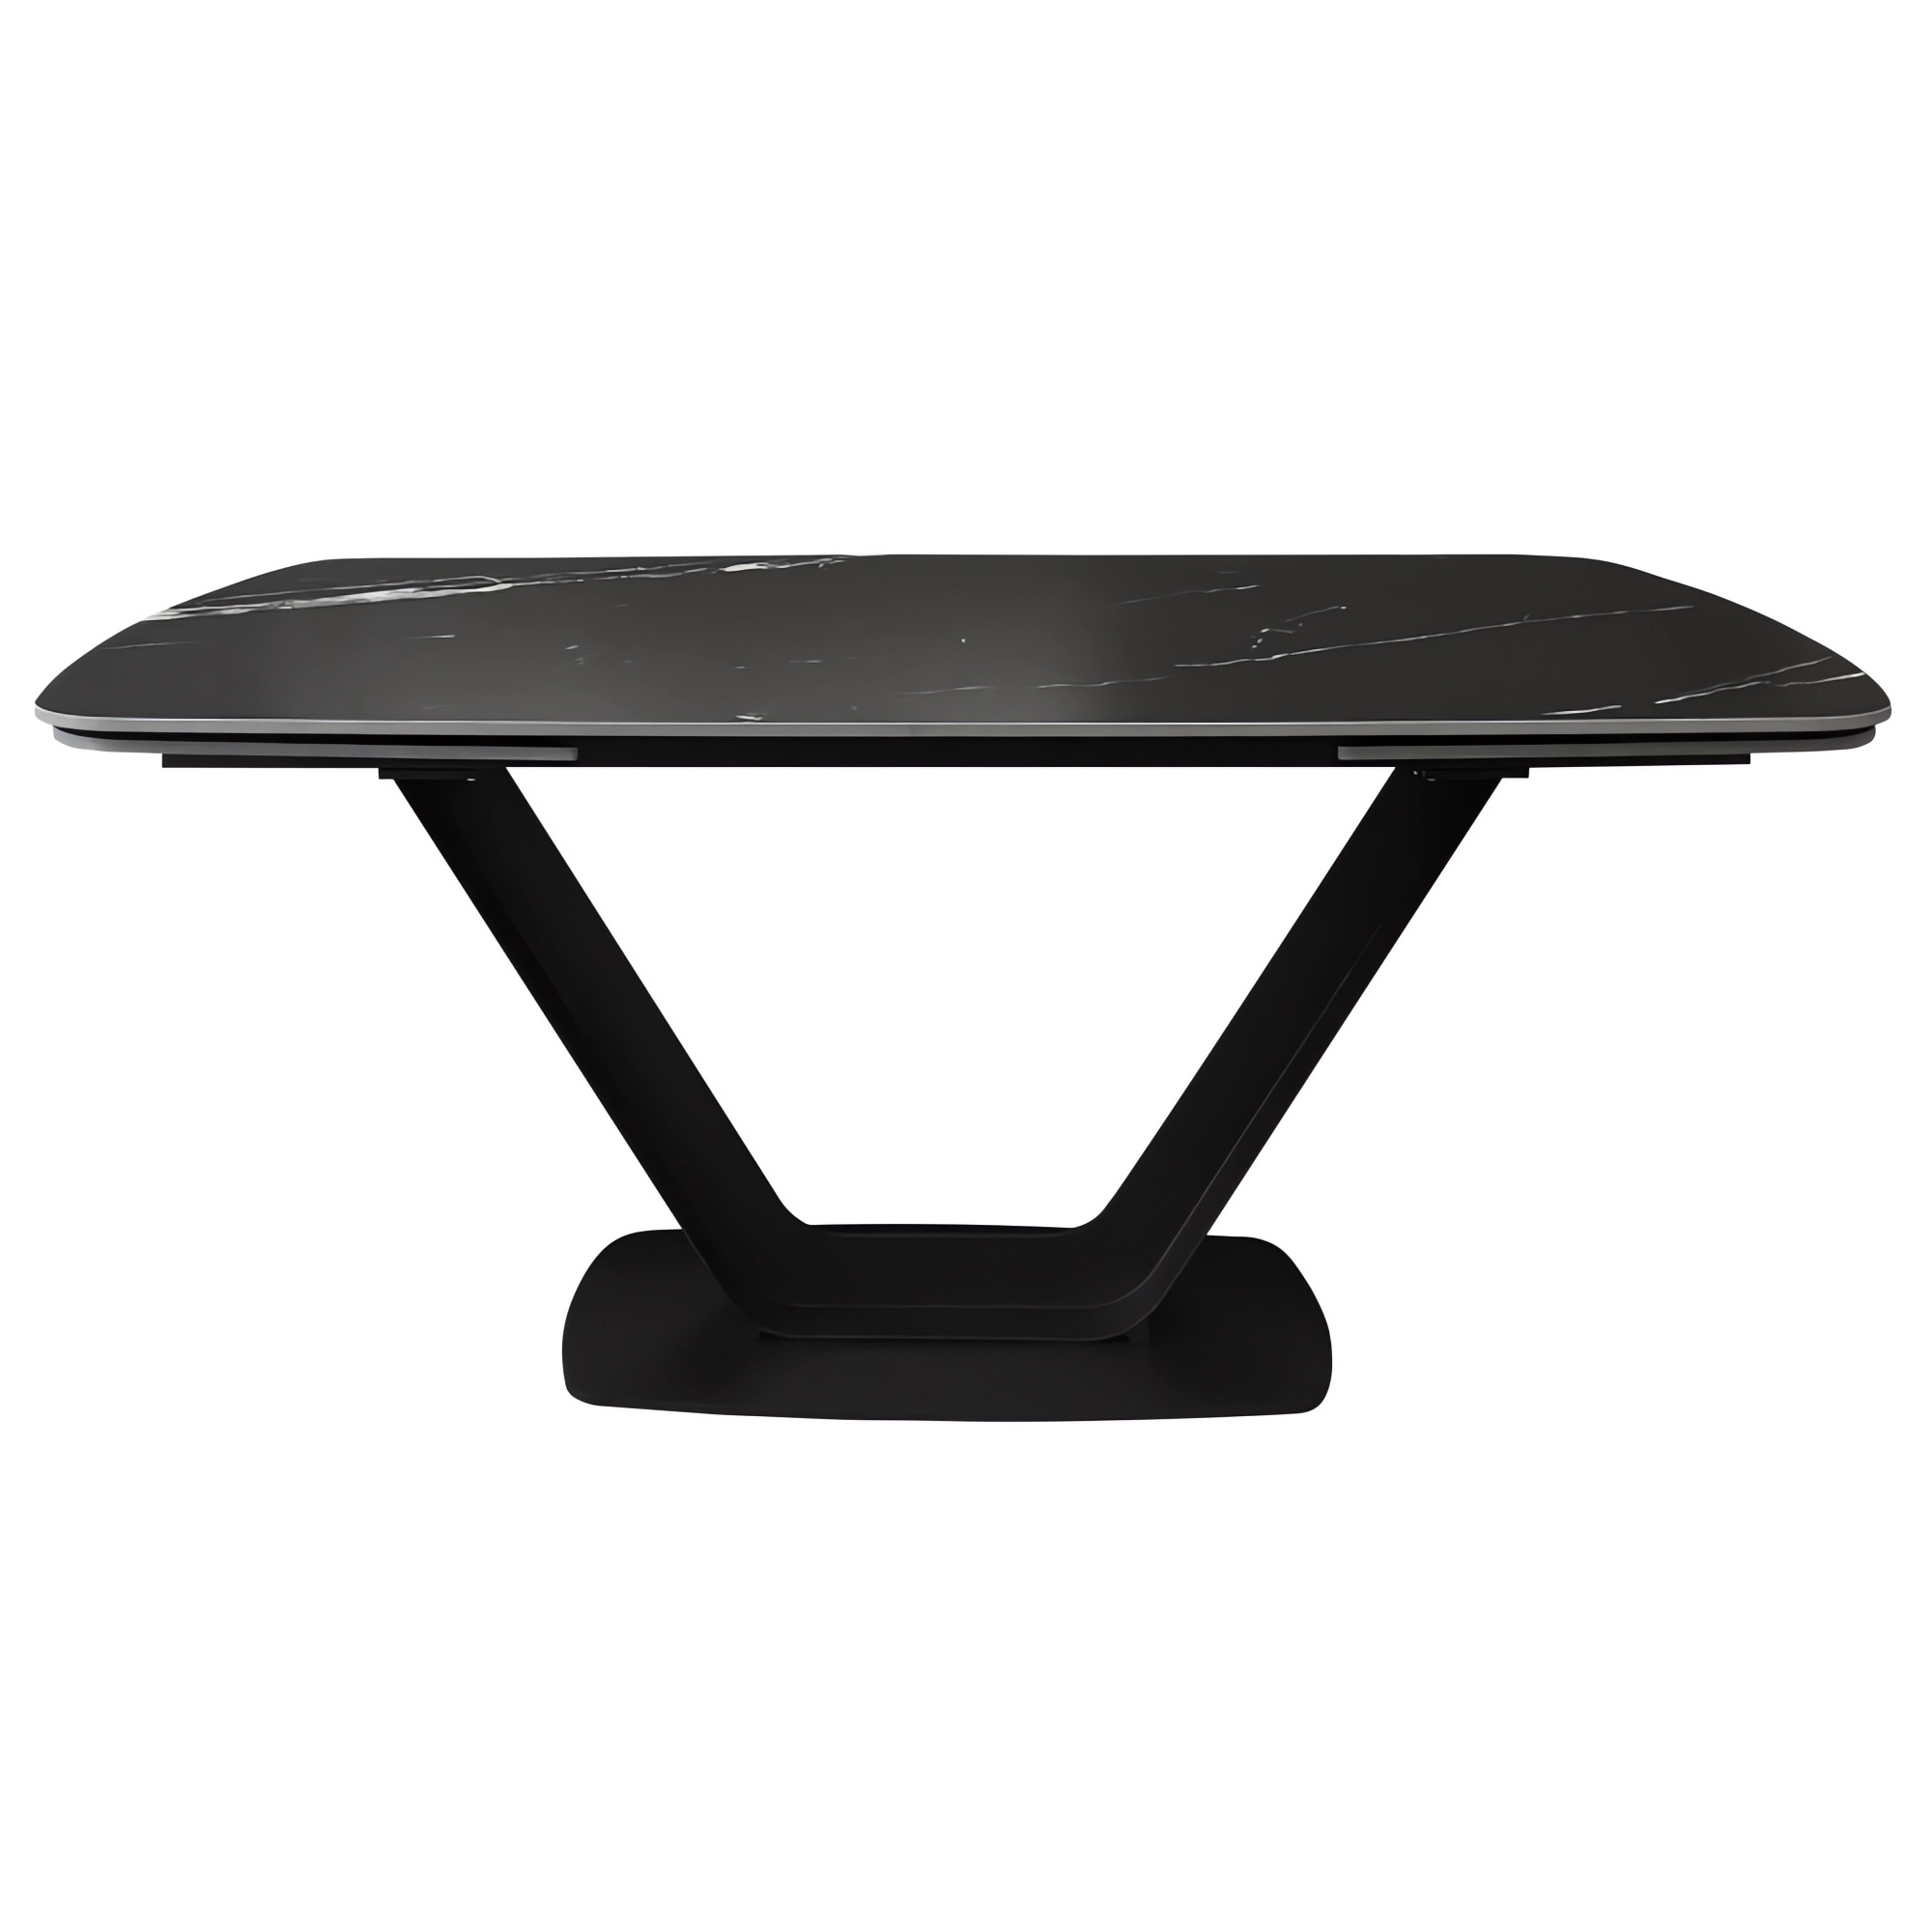 Force Macedonian Black стол раскладной керамика 160-240 см Concepto